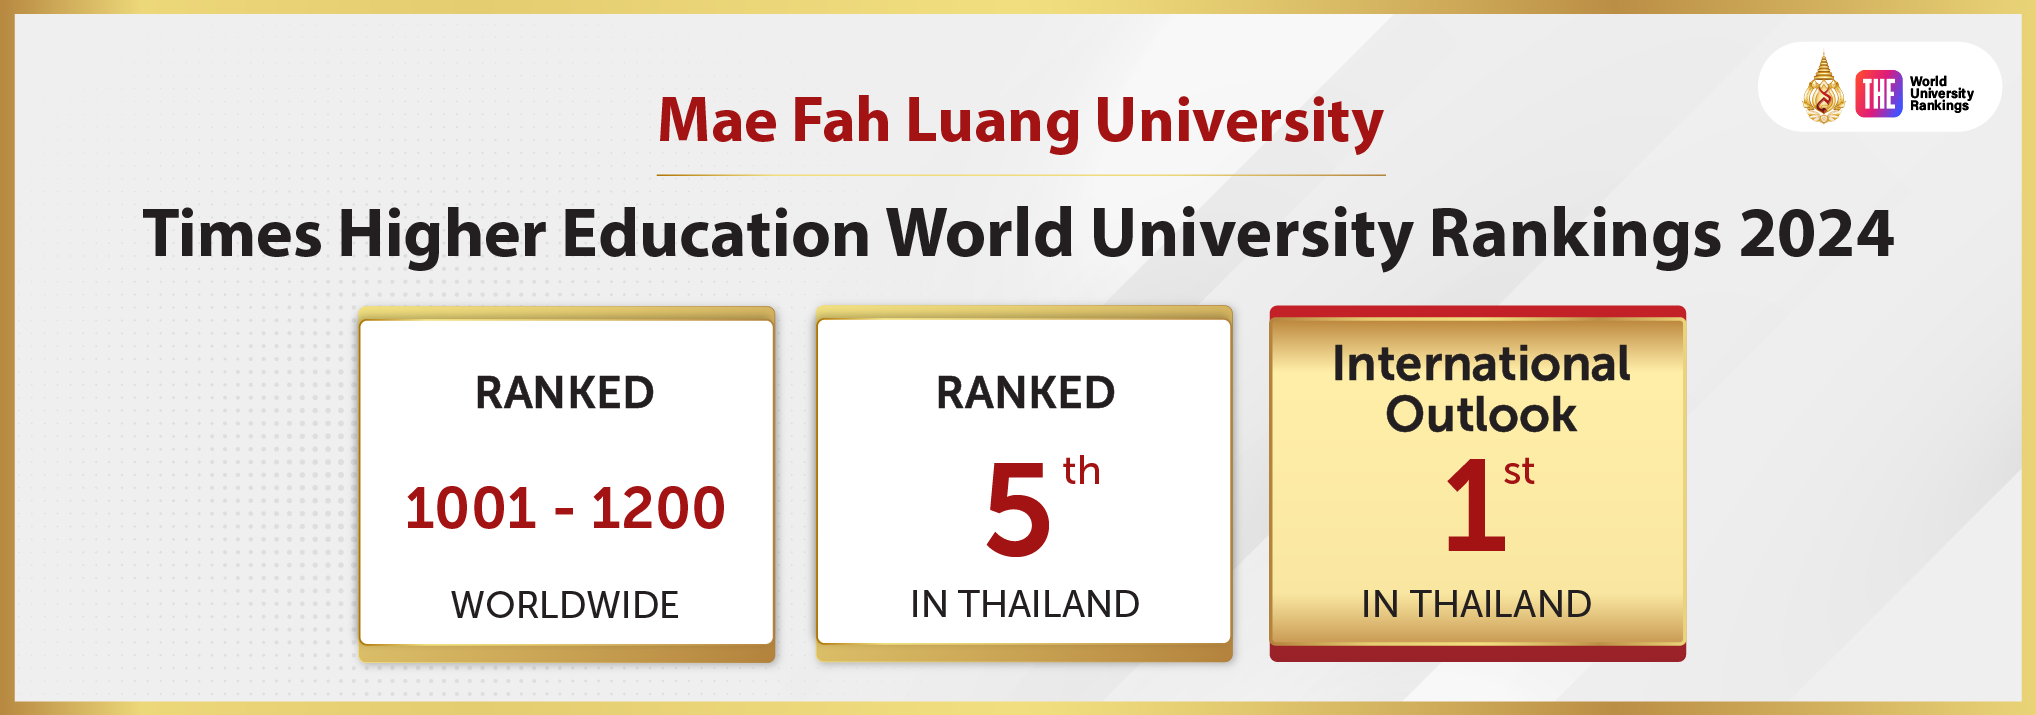 Times Higher Education World University Rankings 2024